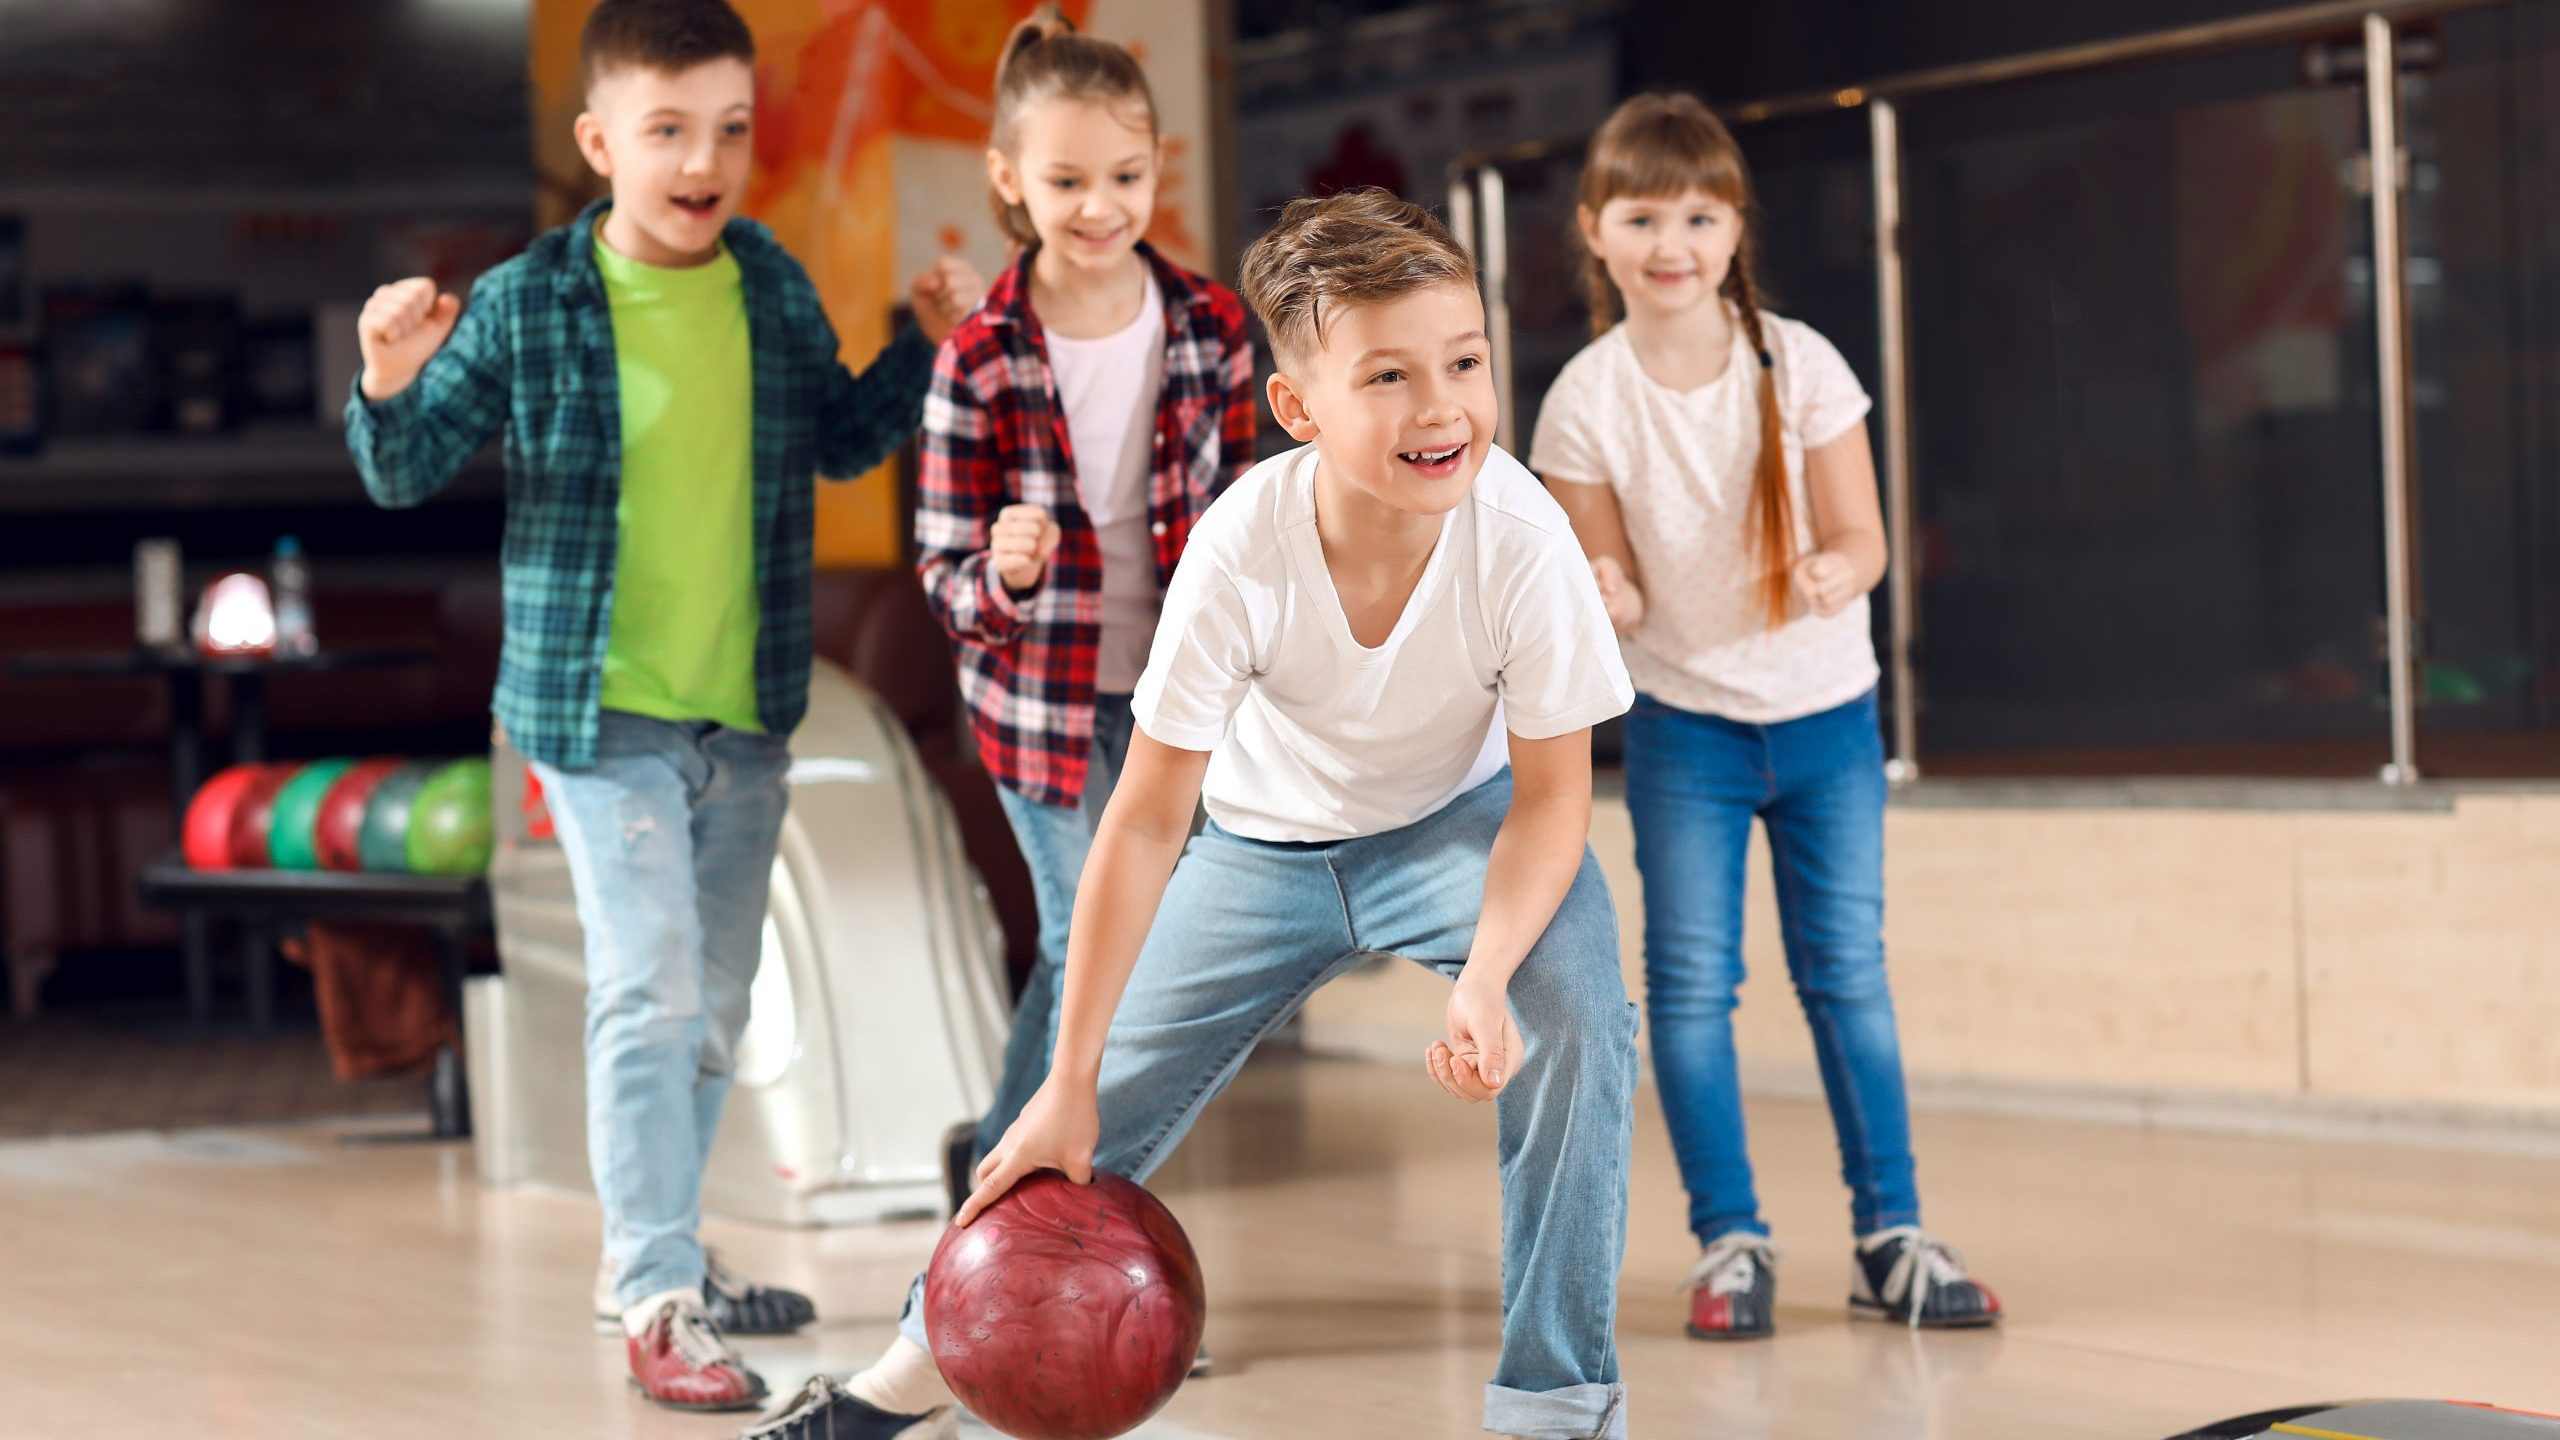 Children bowling